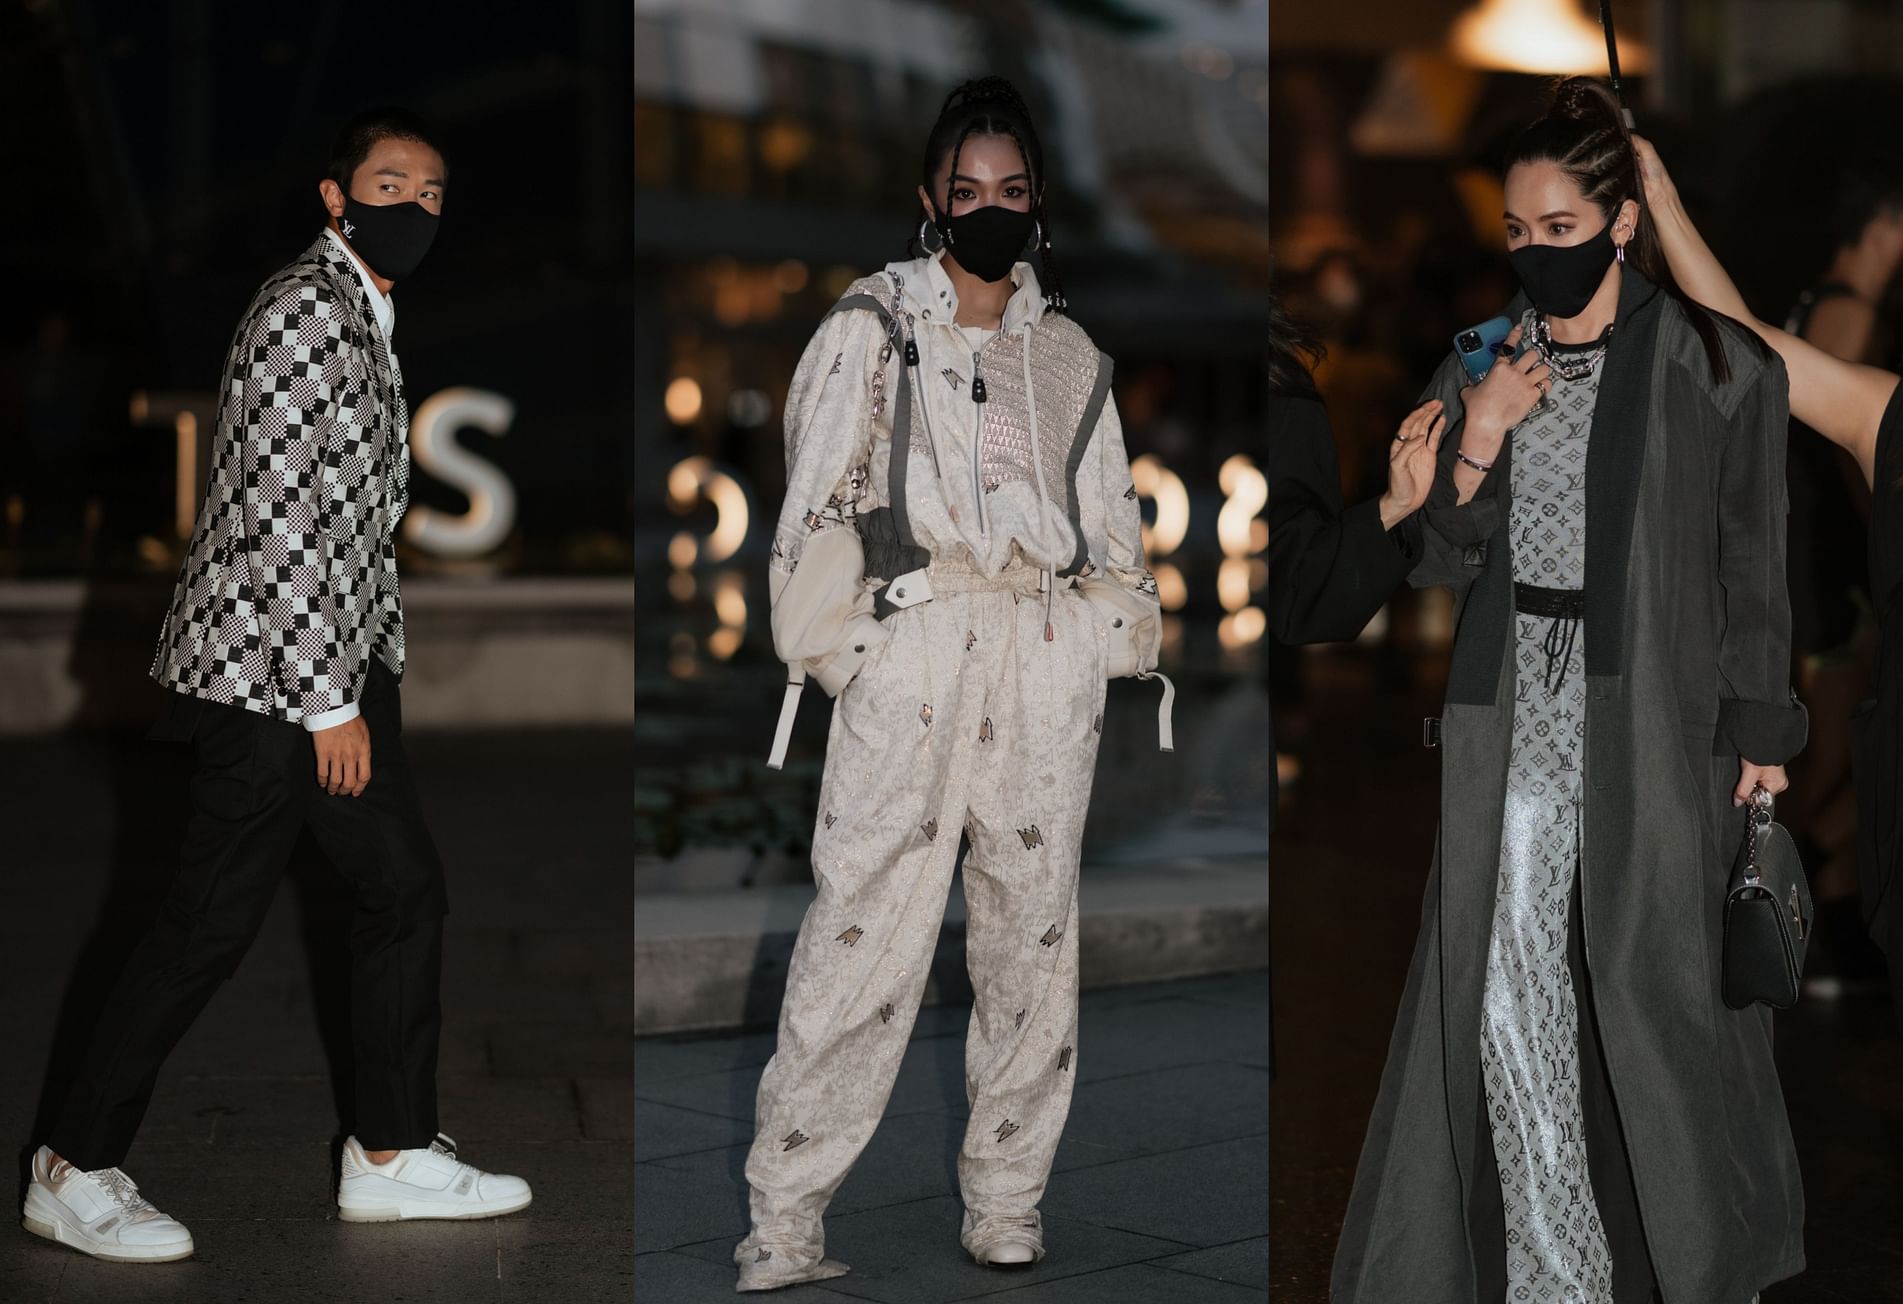 Singaporean Actress Gong Poses Fashion Show Held Louis Vuitton